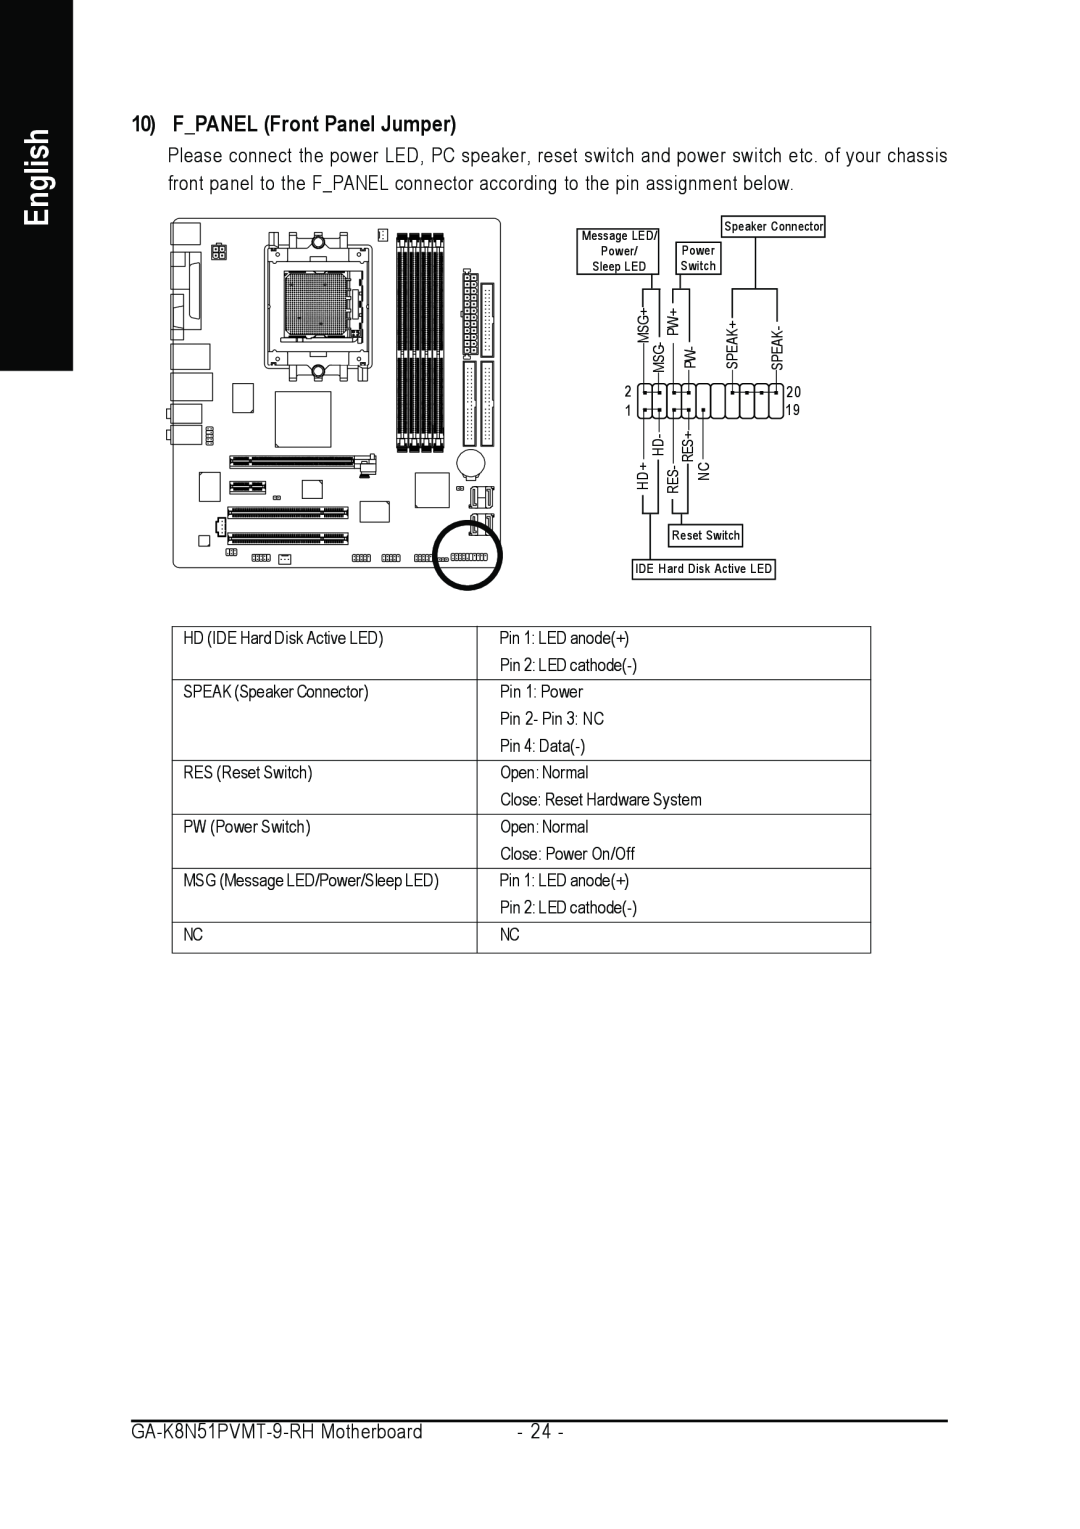 Gigabyte GA-K8N51PVMT-9-RH user manual FPANEL Front Panel Jumper, English, Msg+ Msg- Pw+ Pw, Speak+, Hd+ Hd- Res- Res+ Nc 